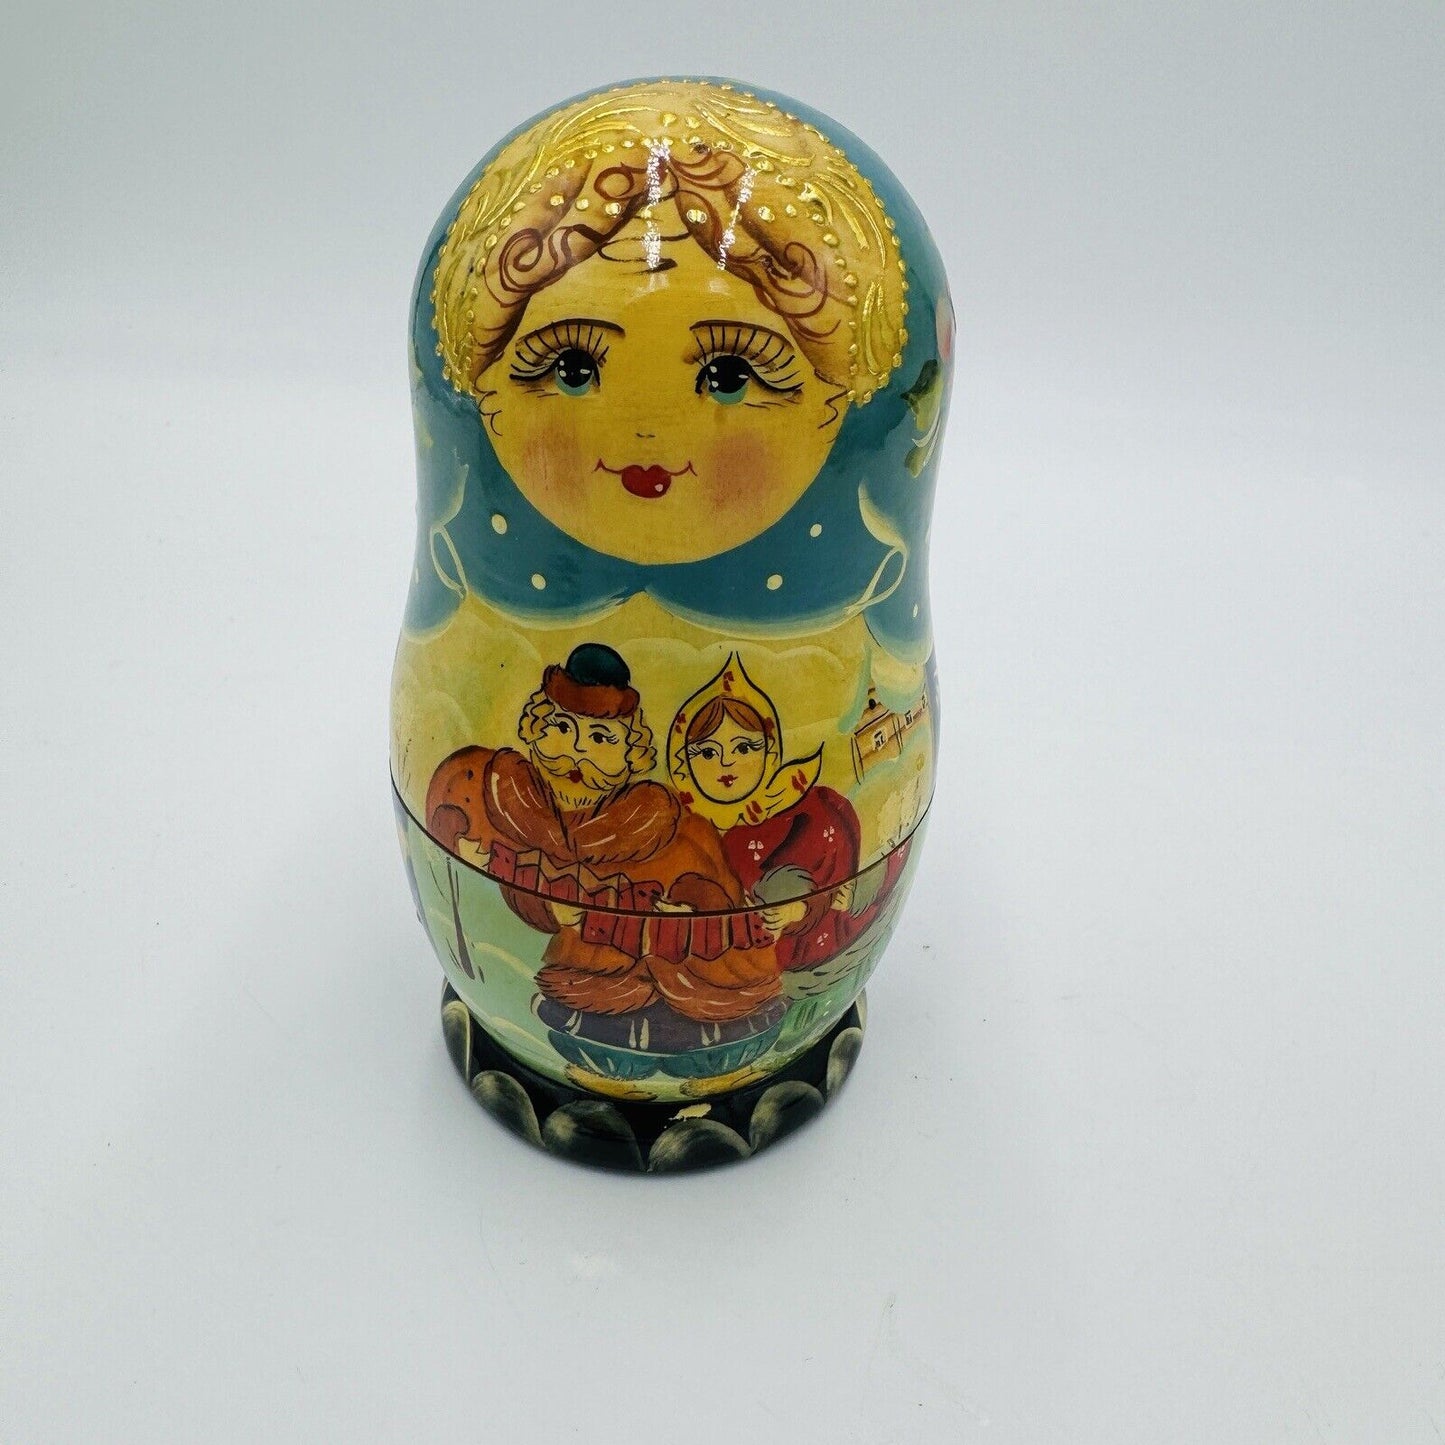 Vintage Matryoshka Nesting Doll with 5 Christmas Ornaments Handpainted 6"